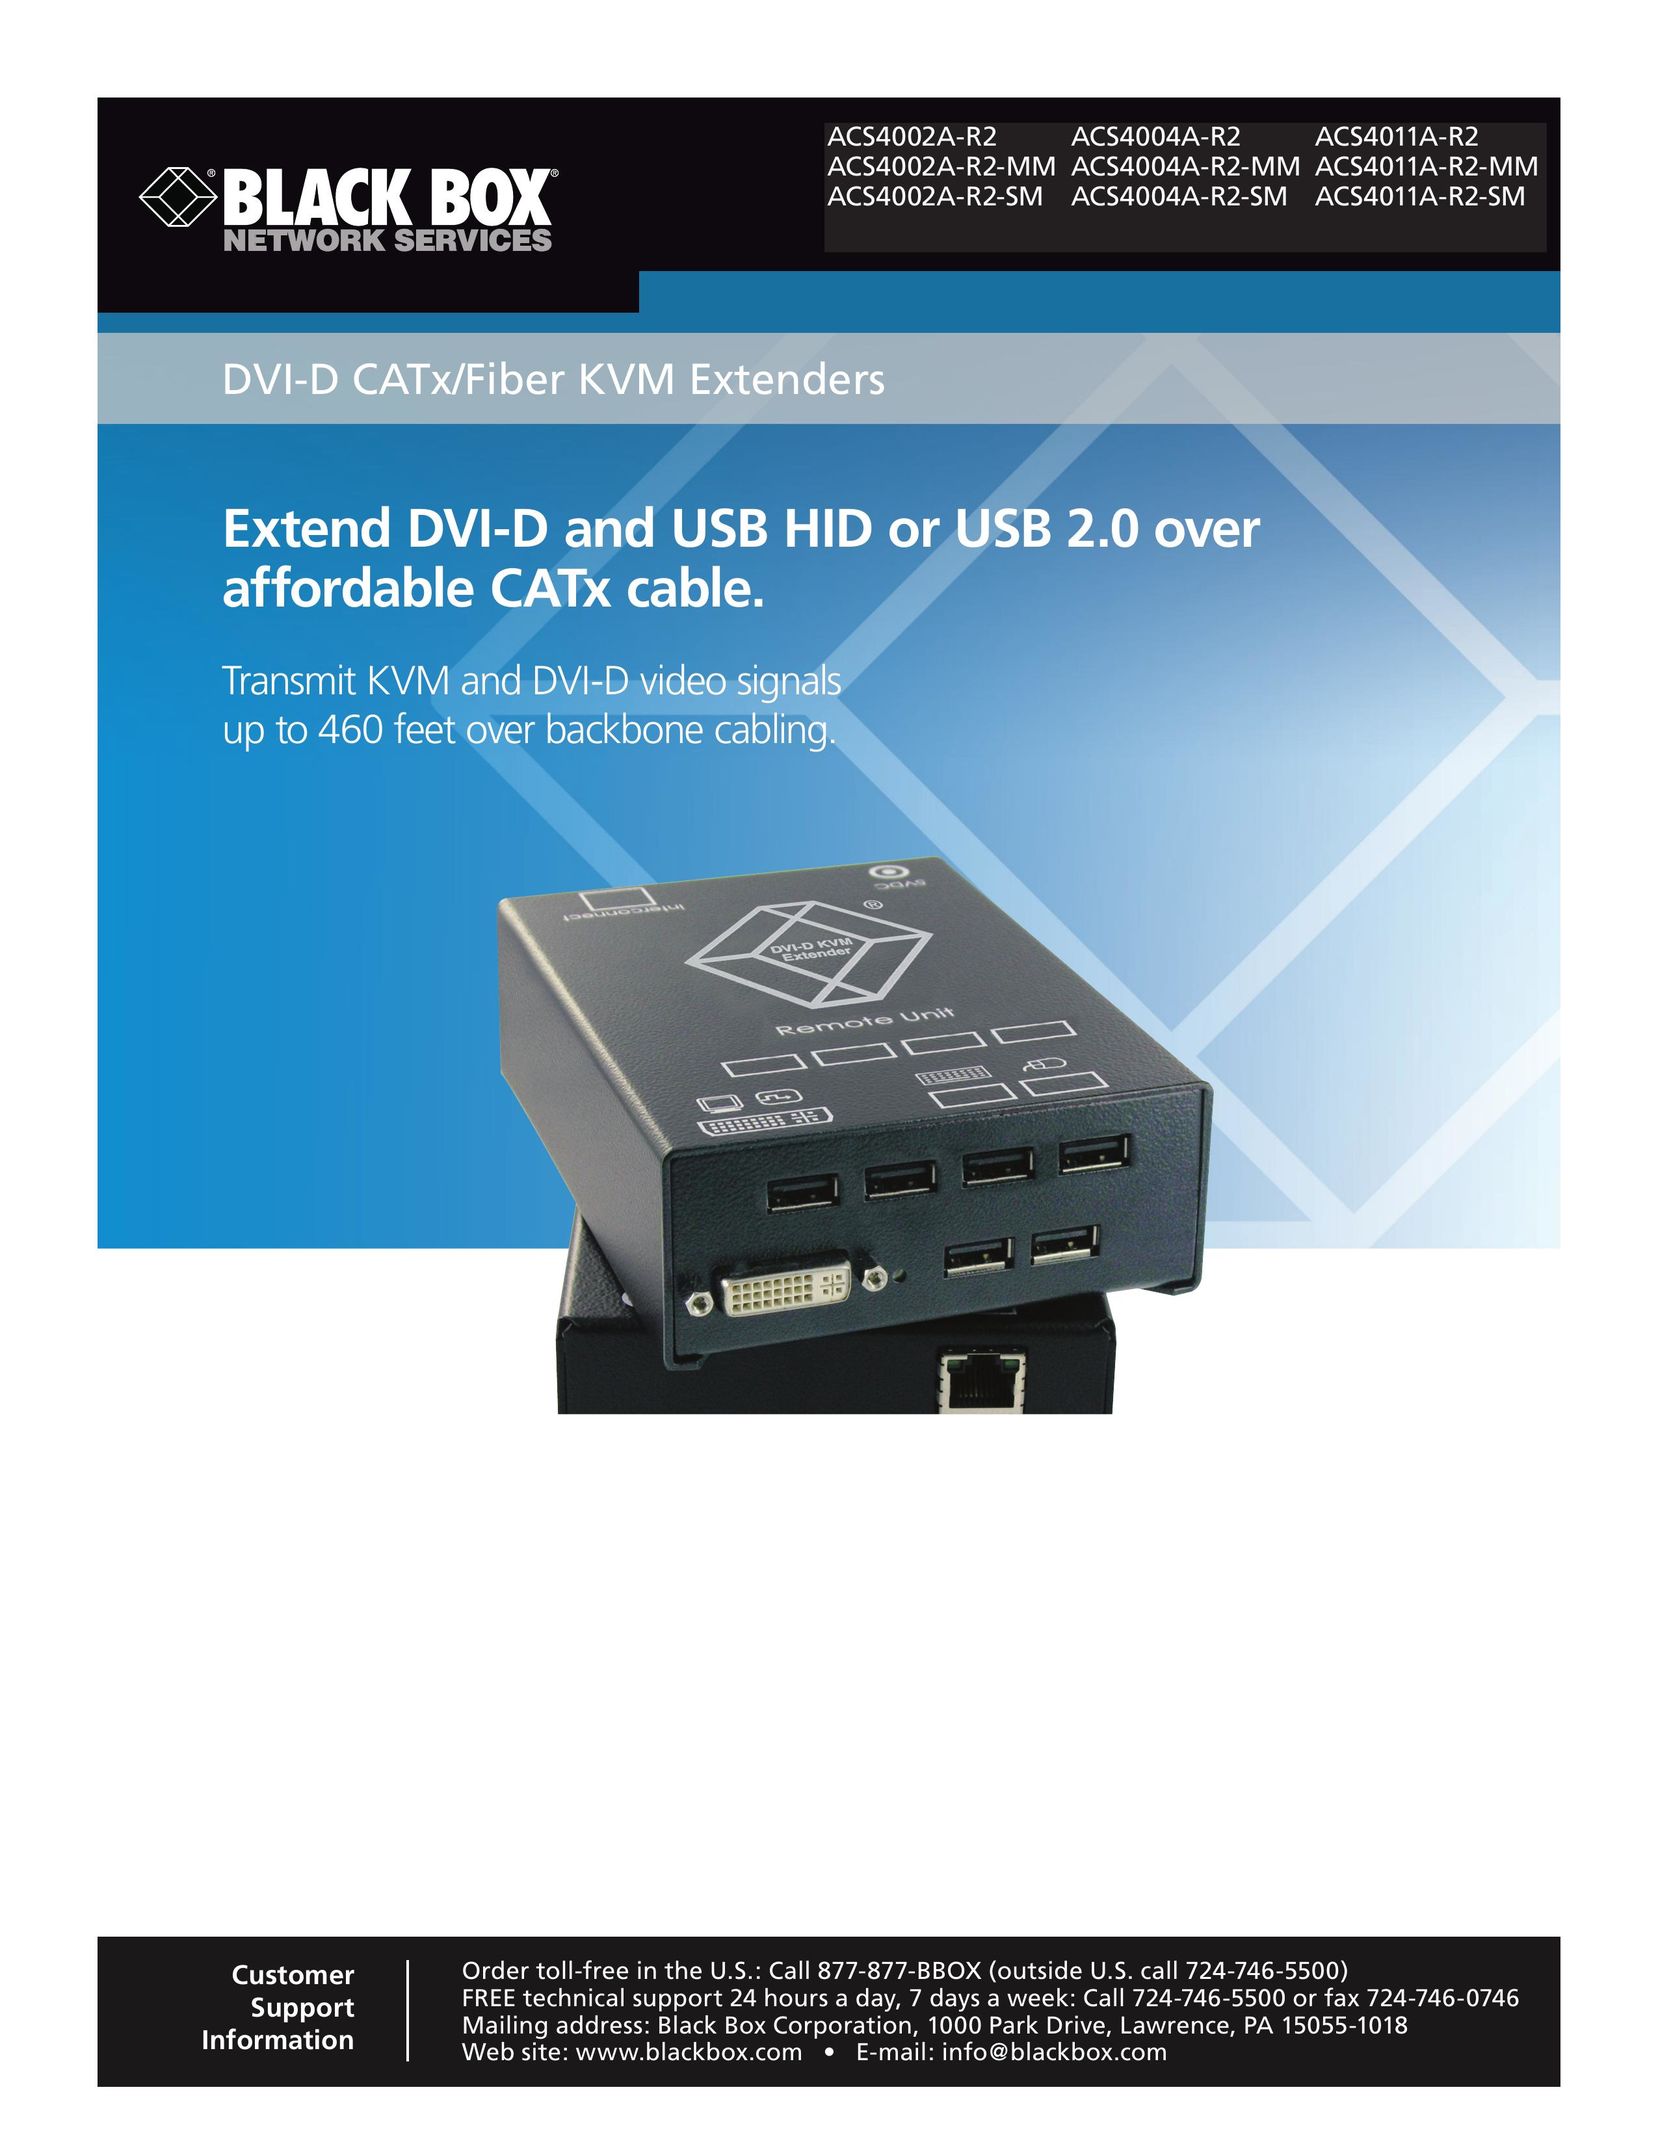 Black Box ACS4004A-R2-SM Network Hardware User Manual